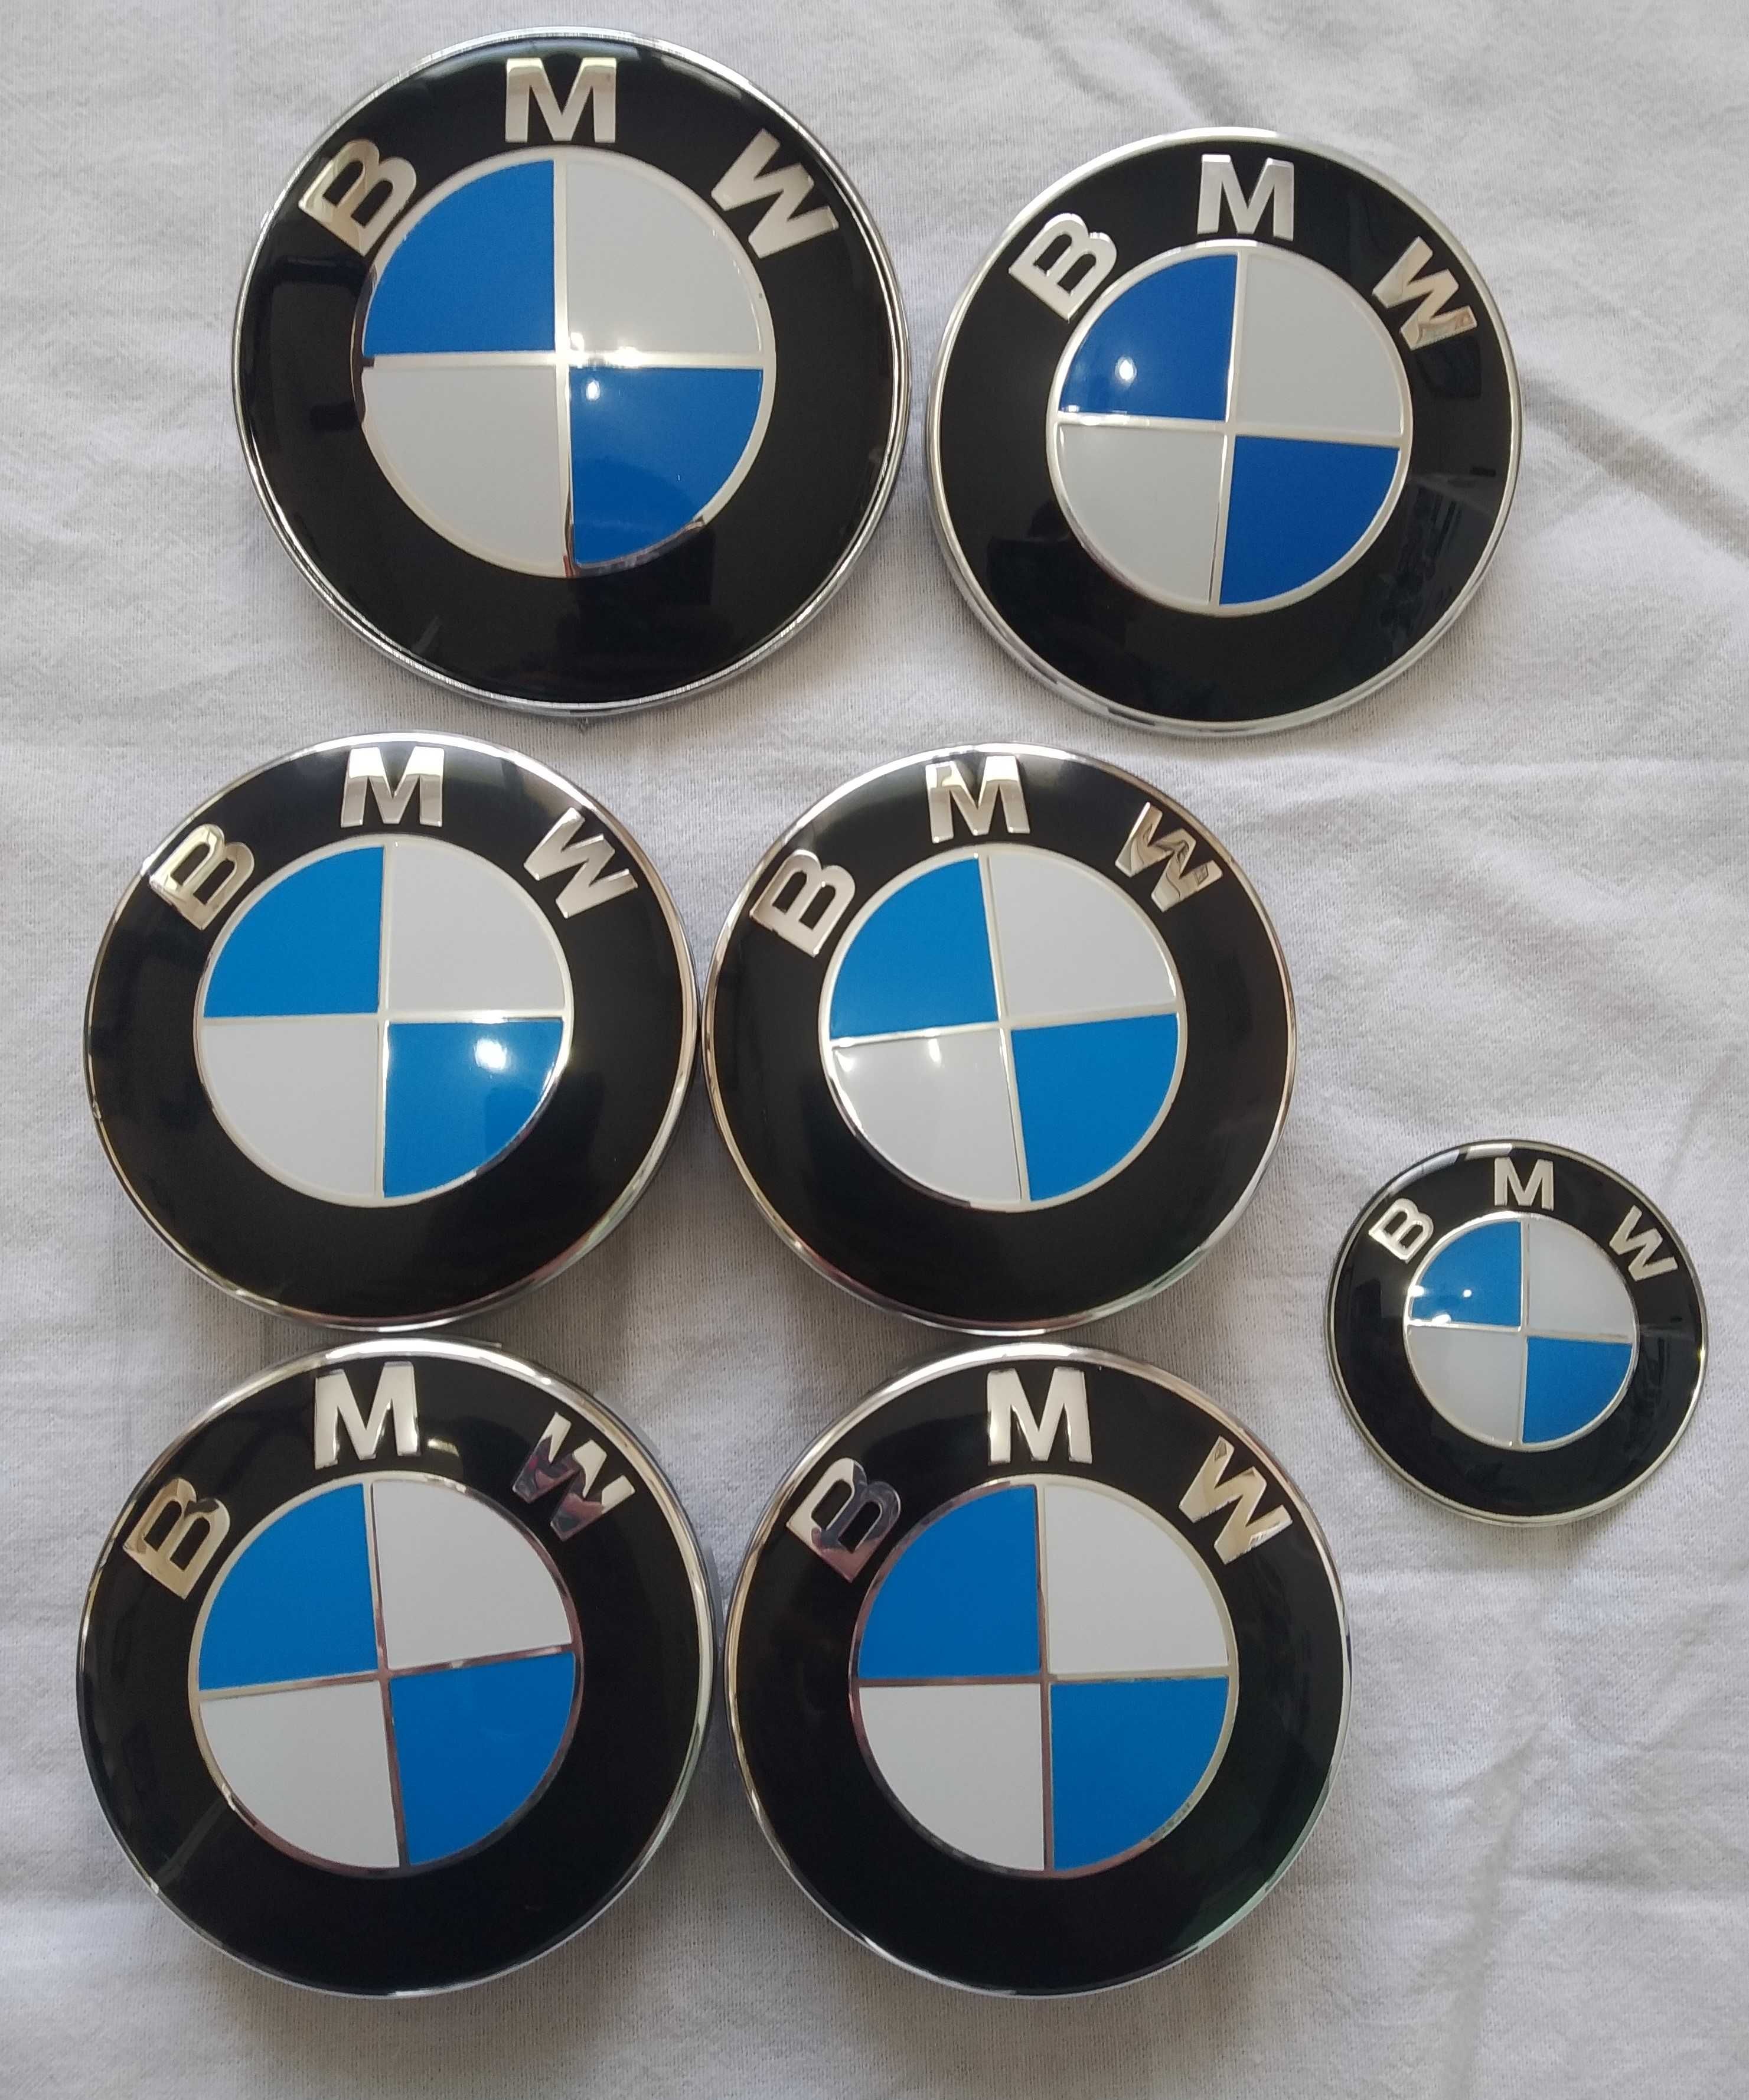 Всякакви емблеми, капачки и стикери за BMW (82,78,74,68,67,56,11mm)